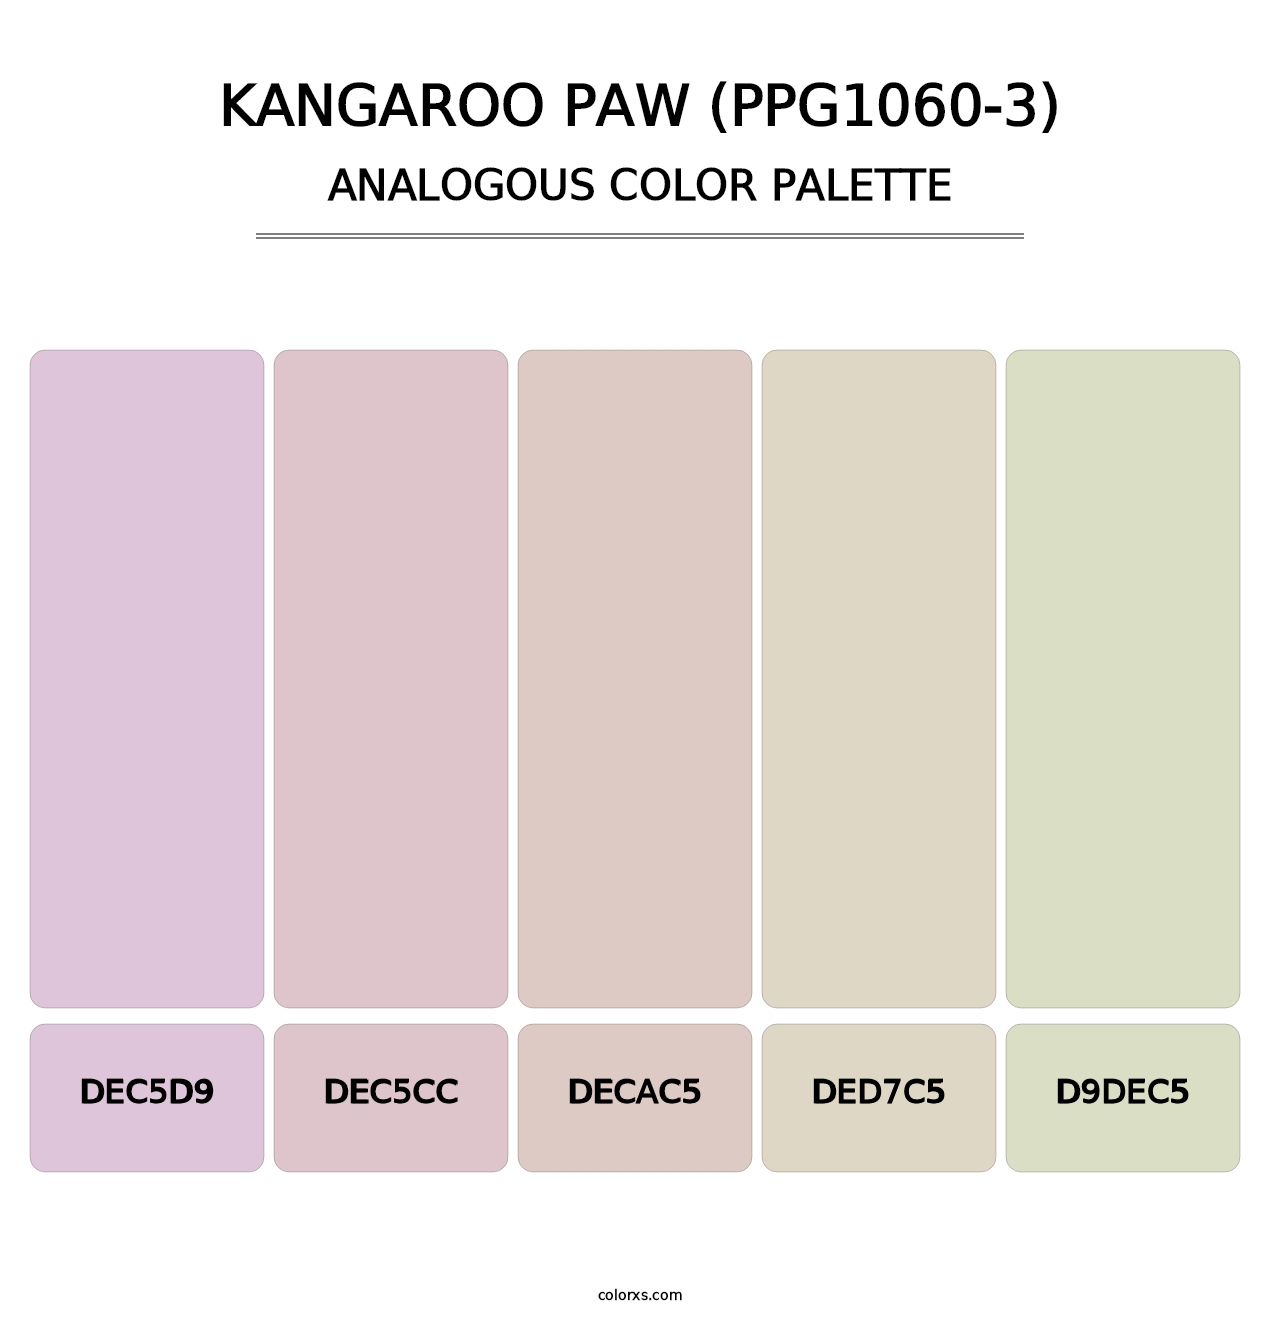 Kangaroo Paw (PPG1060-3) - Analogous Color Palette